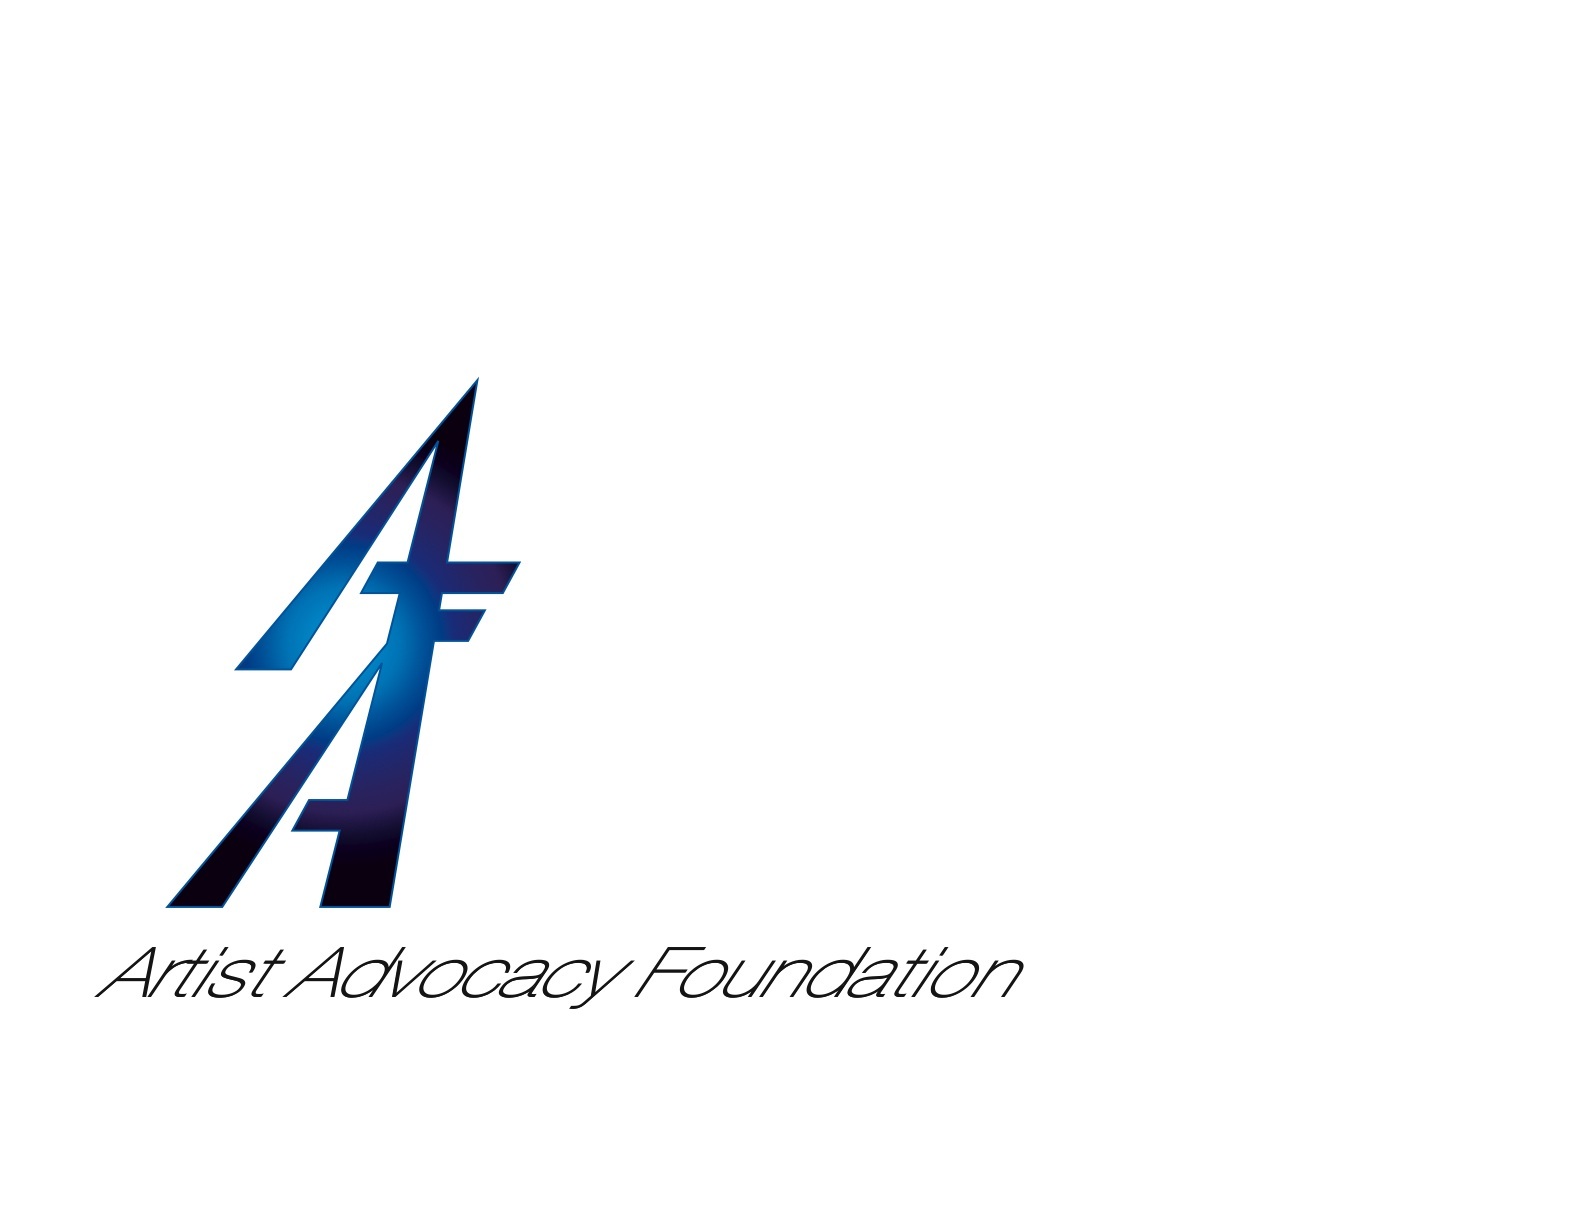 Artist Advocacy Foundation